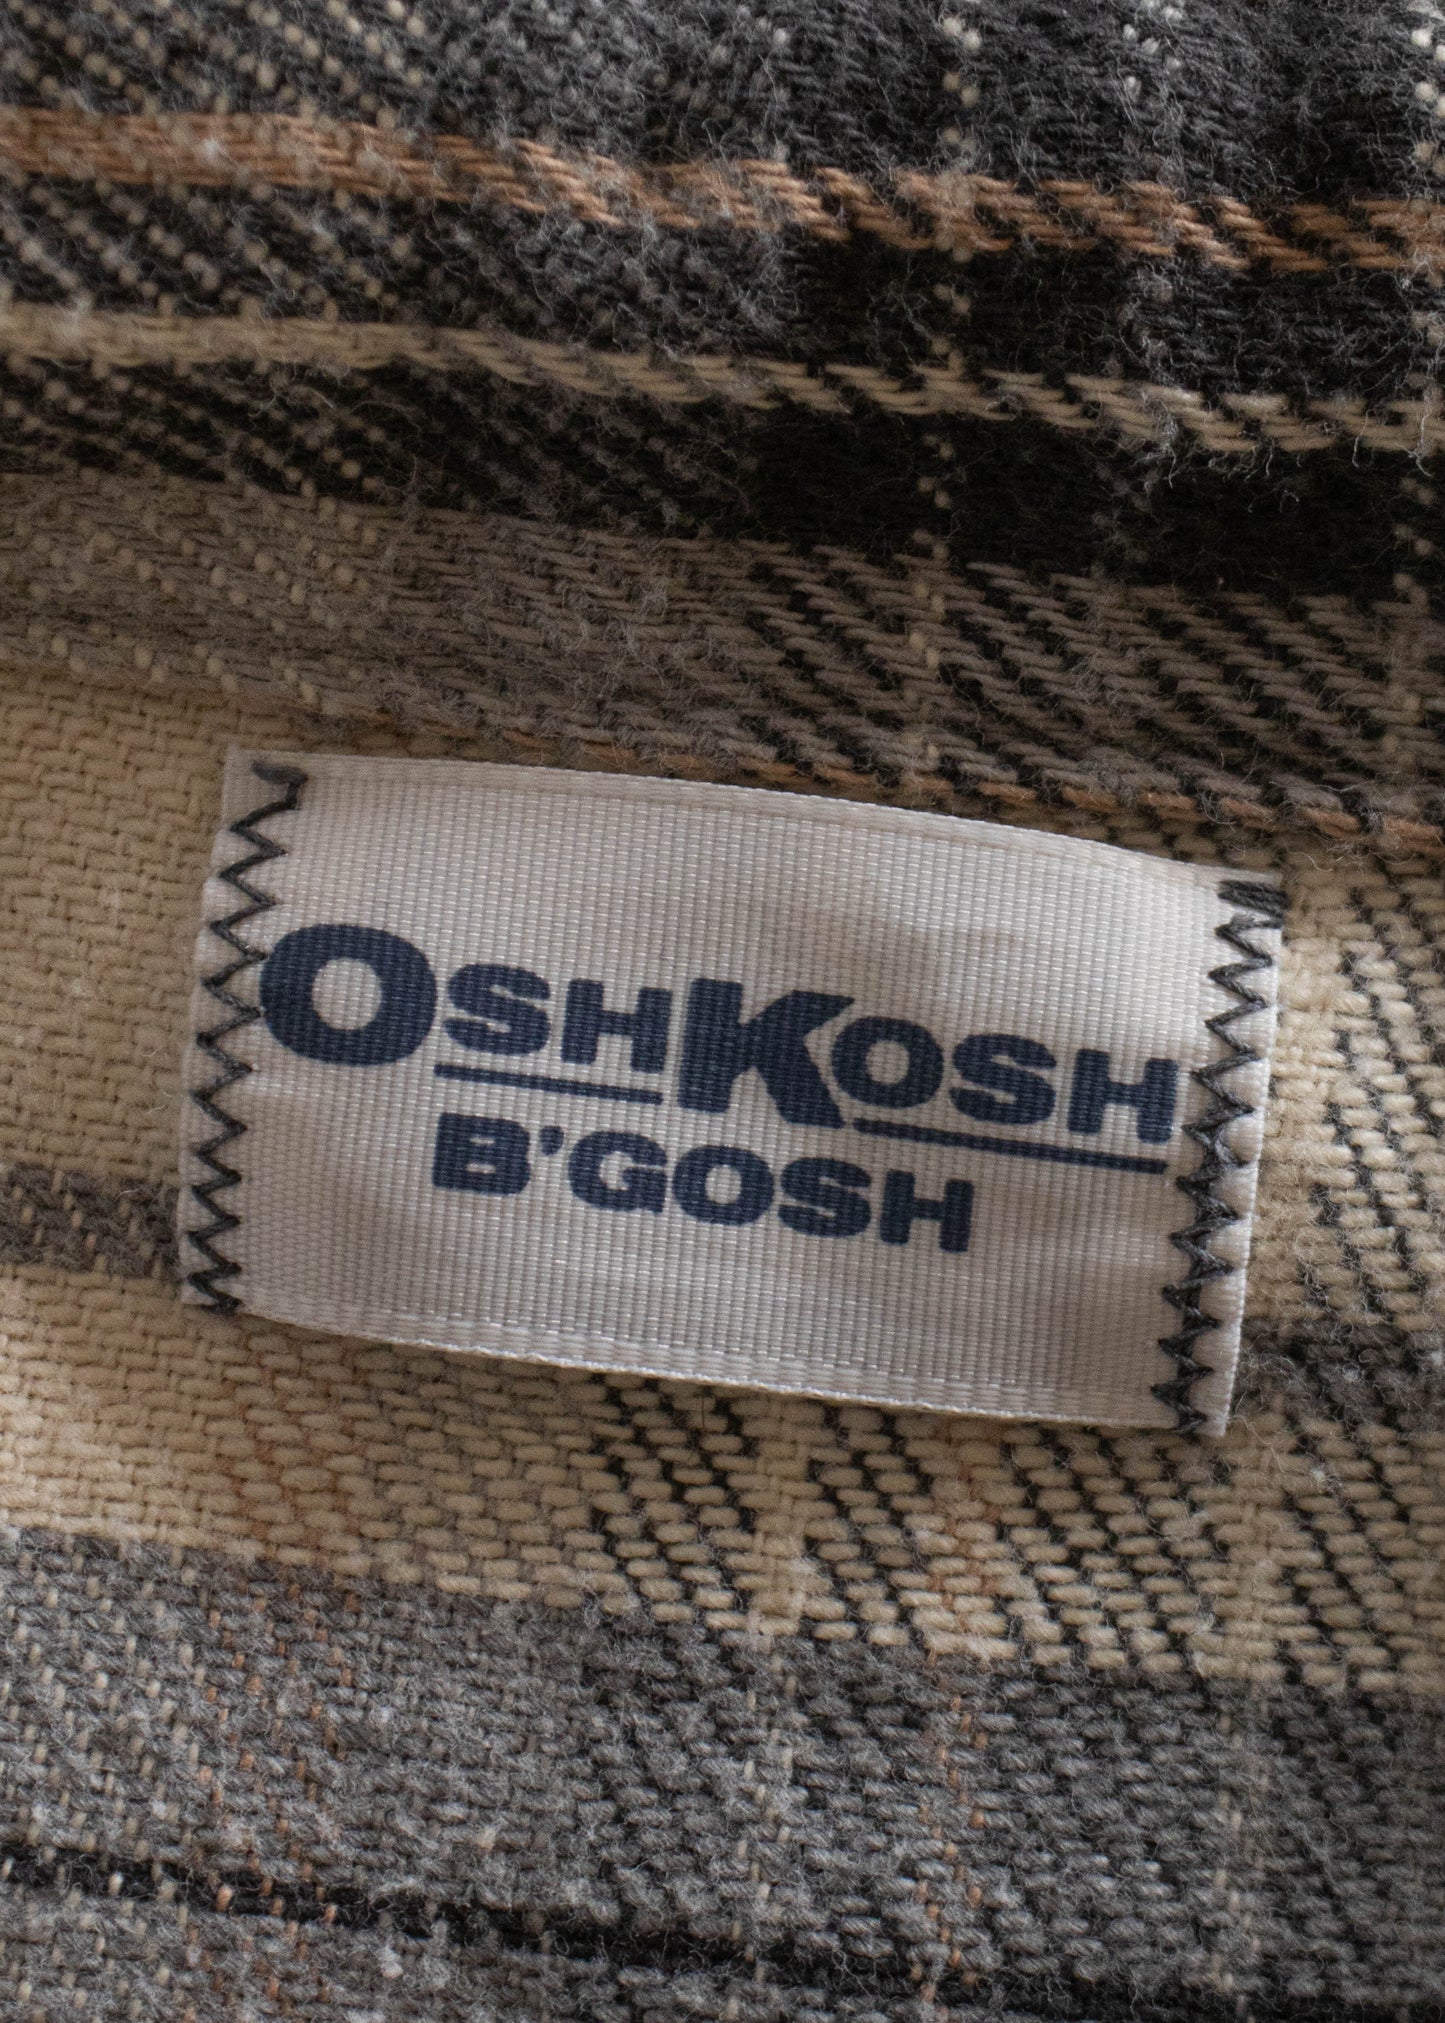 1980s OshKosh Cotton Flannel Button Up Shirt Size XL/2XL